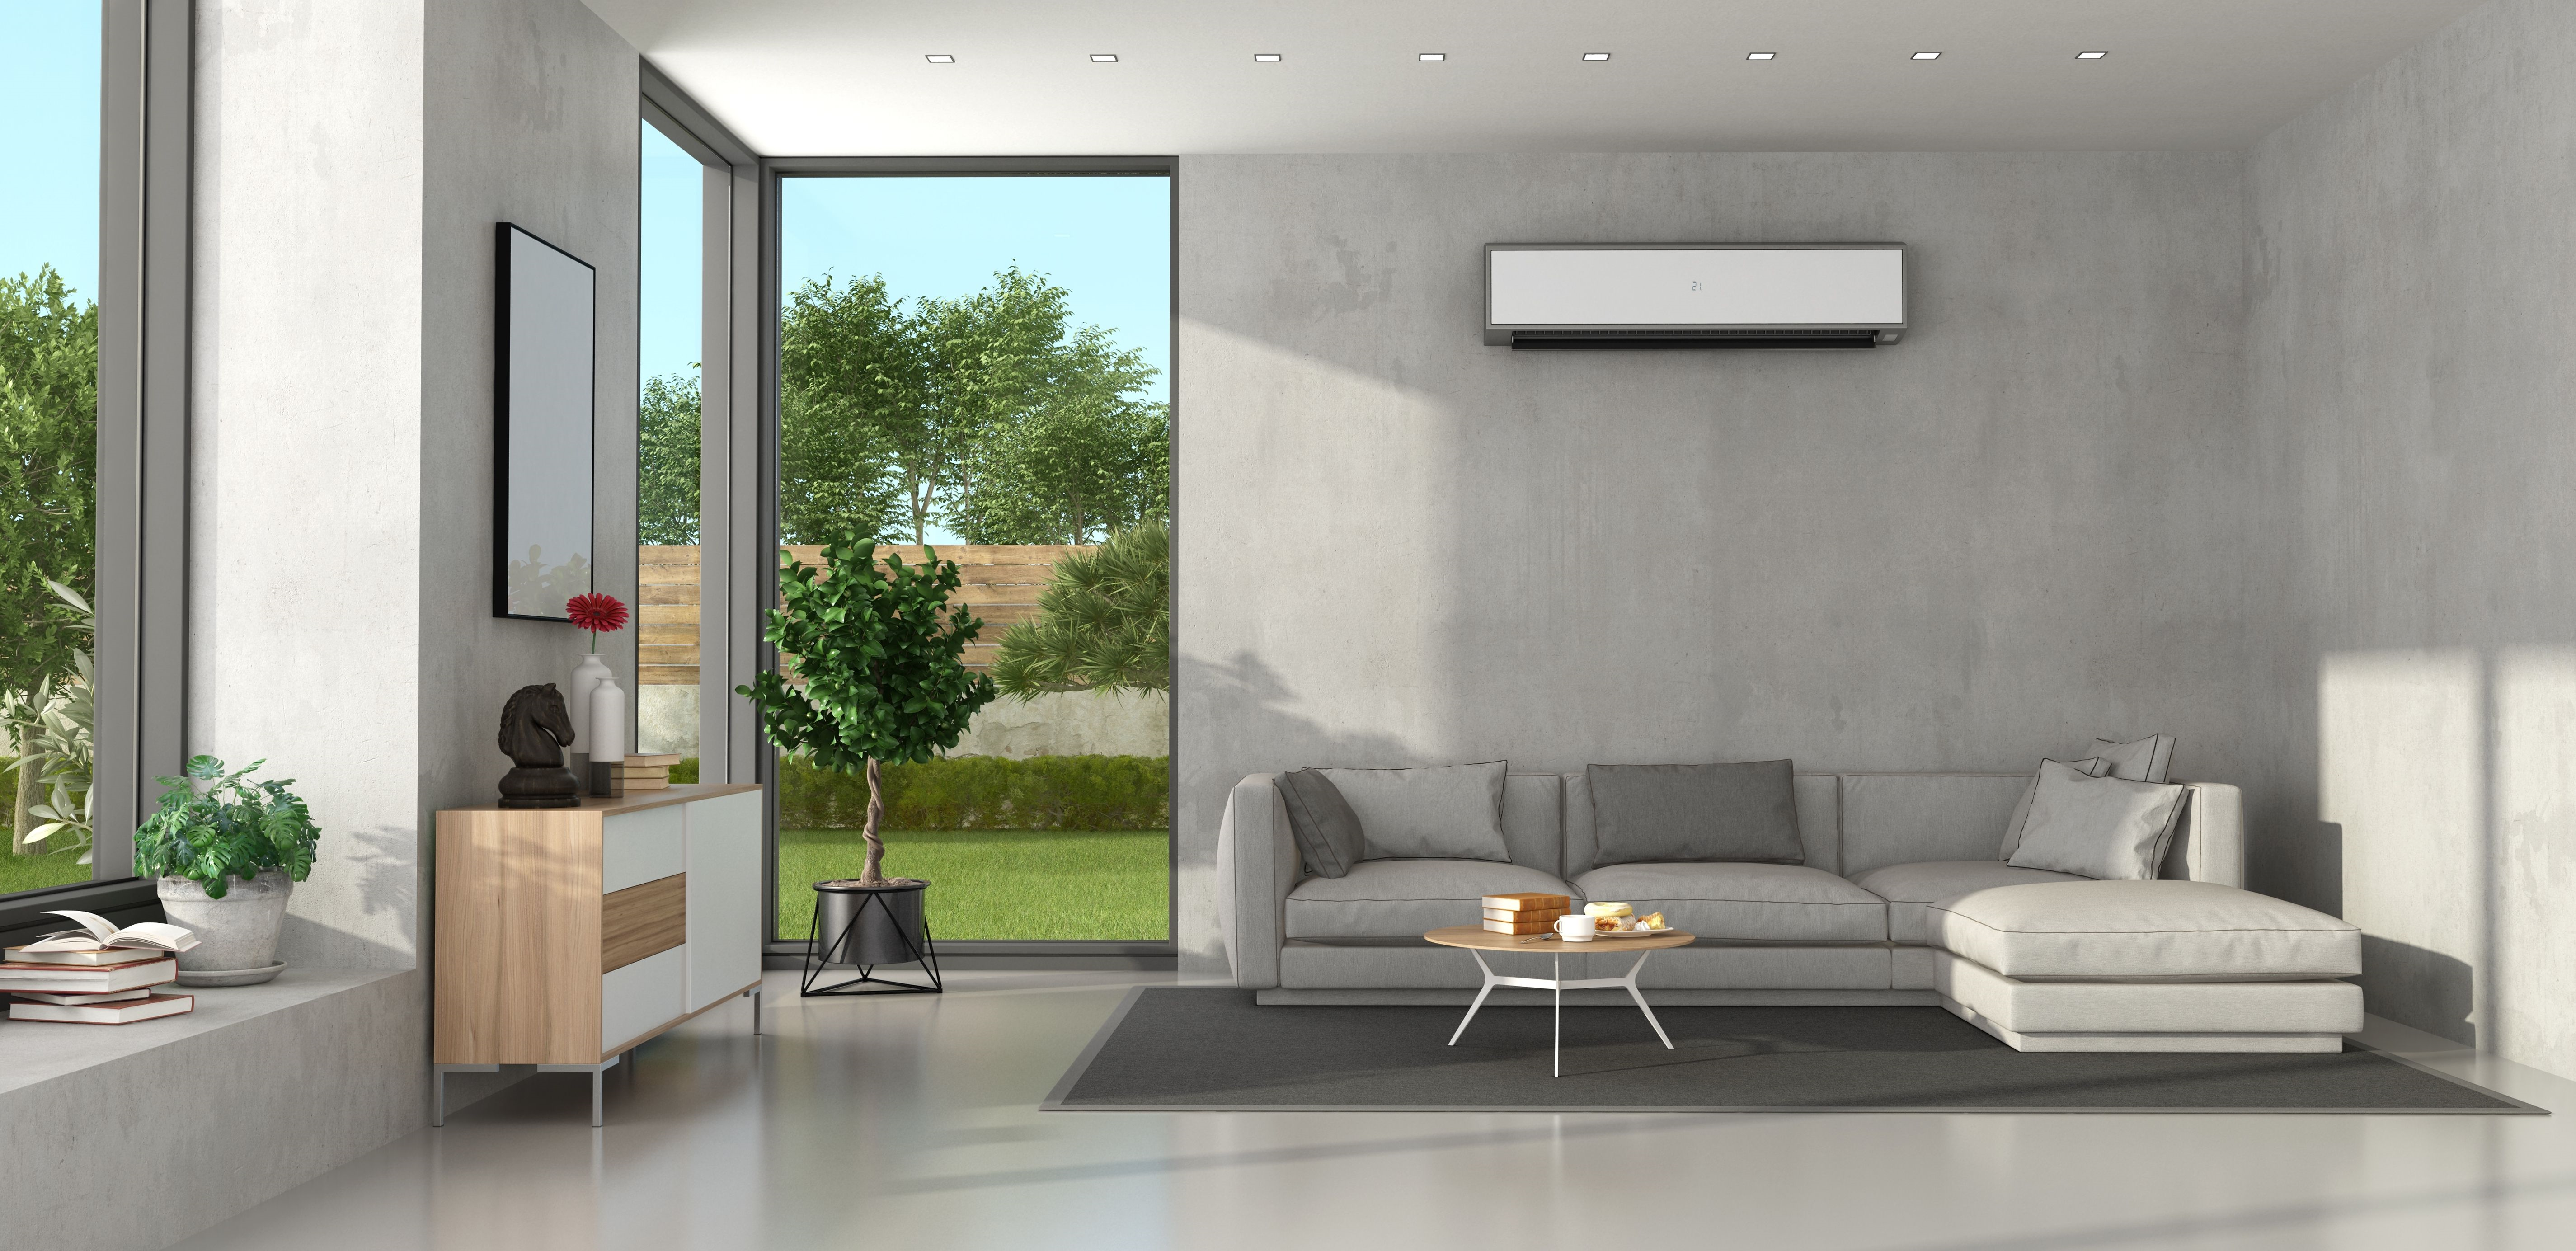  Modern minimalist villa living room